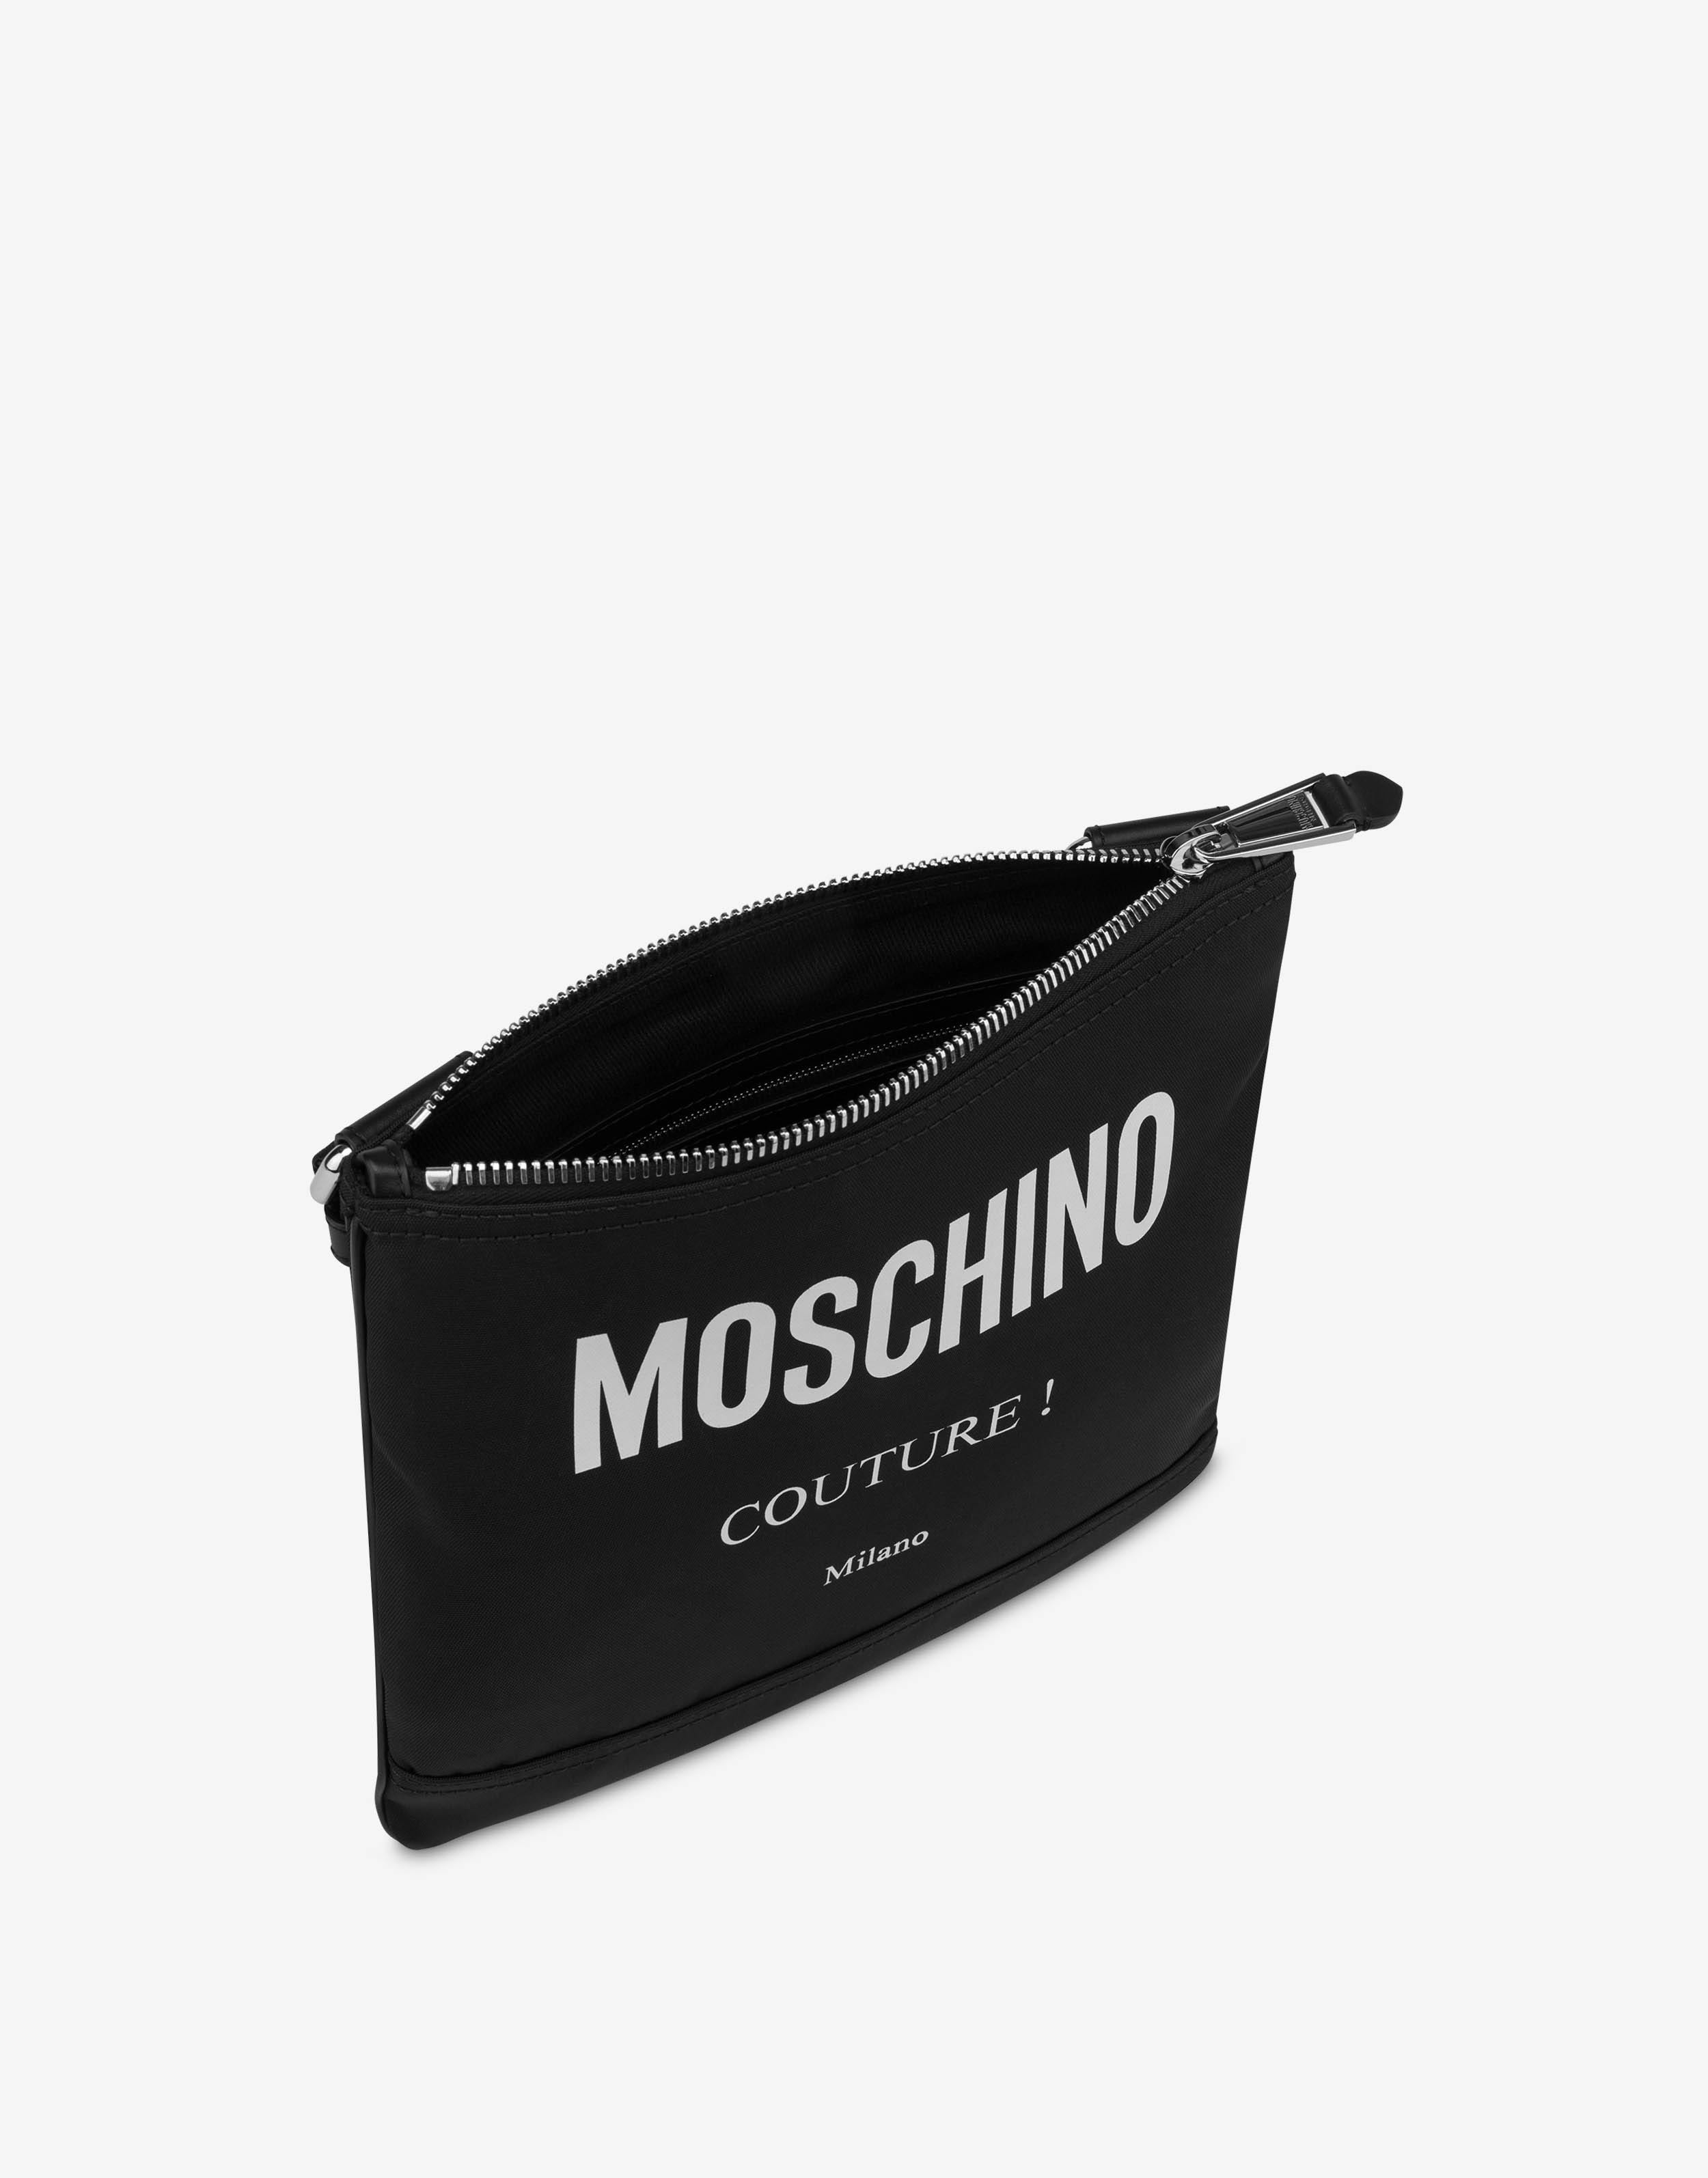 MOSCHINO COUTURE SHOULDER BAG - 3